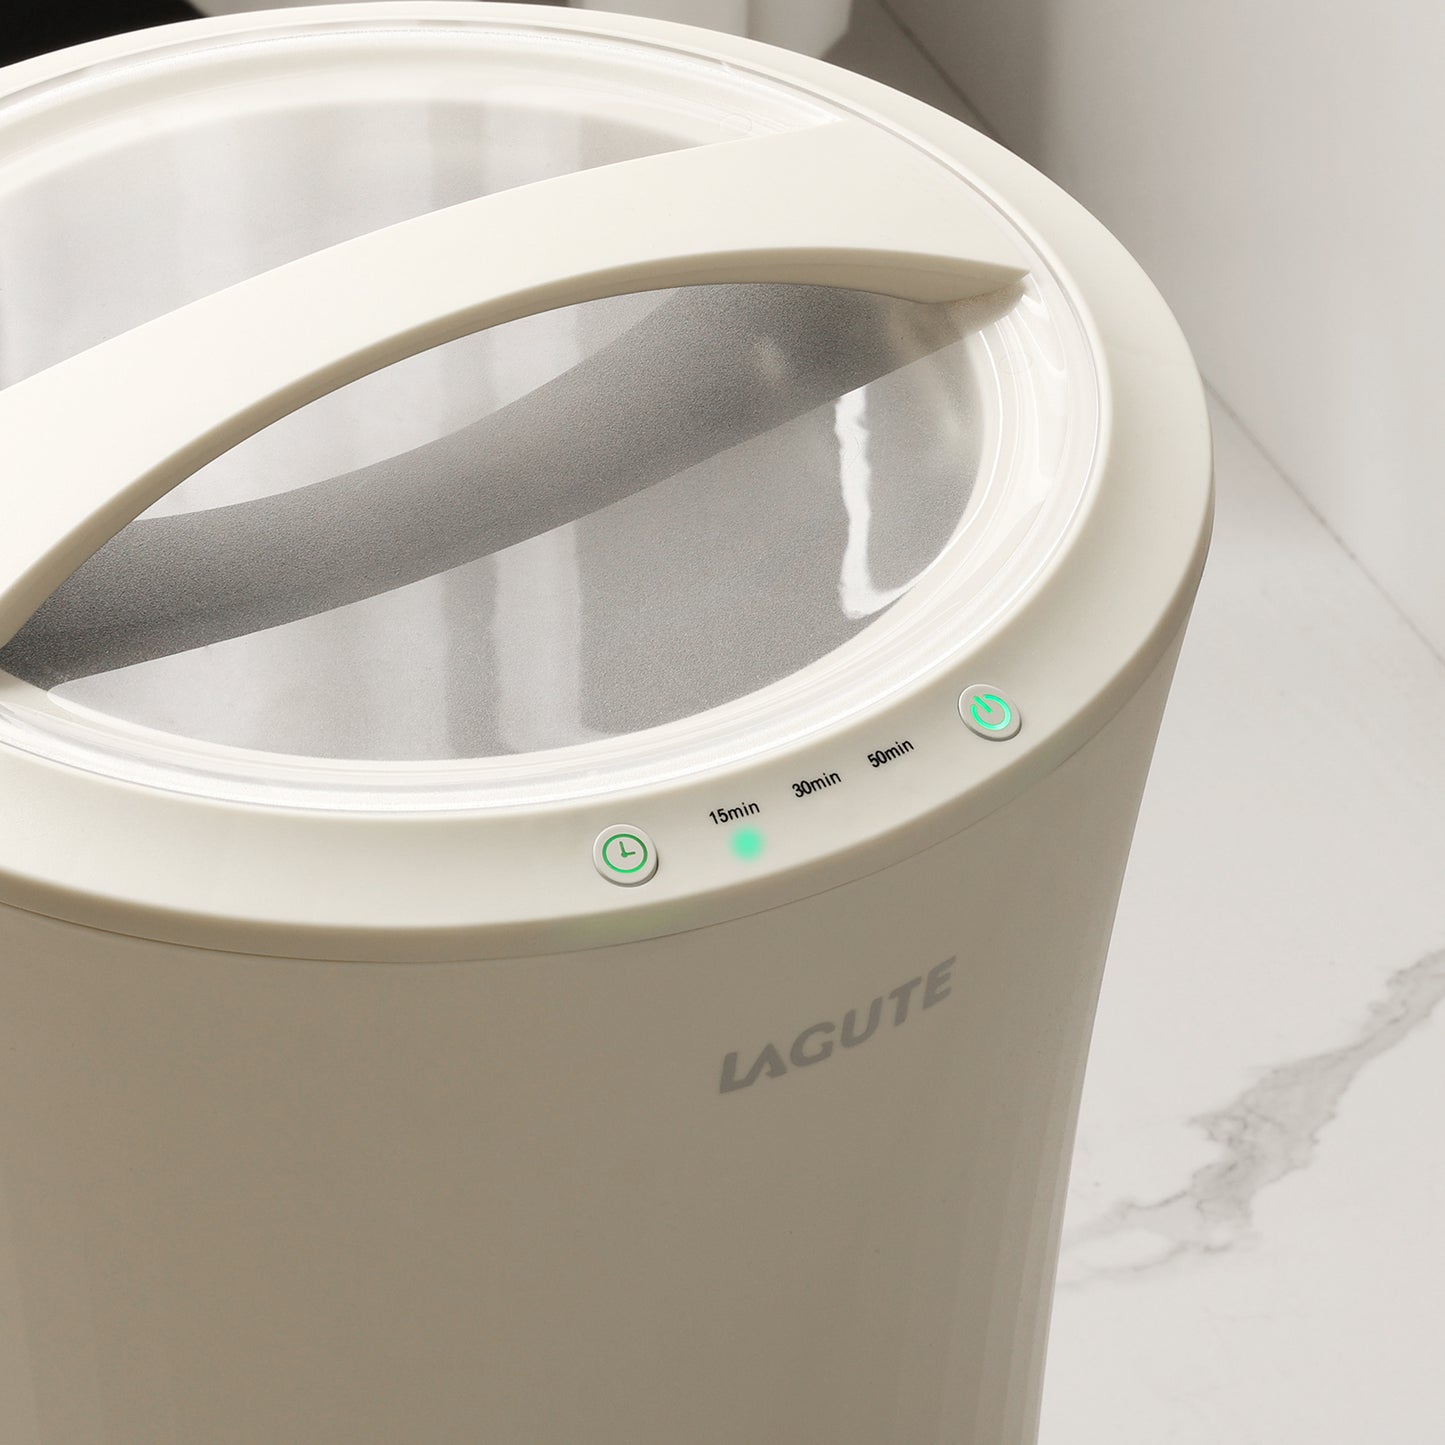 Lagute iSnug Towel Warmer, 5.3 Gal Heating Bucket for Bathrobe, Blanket